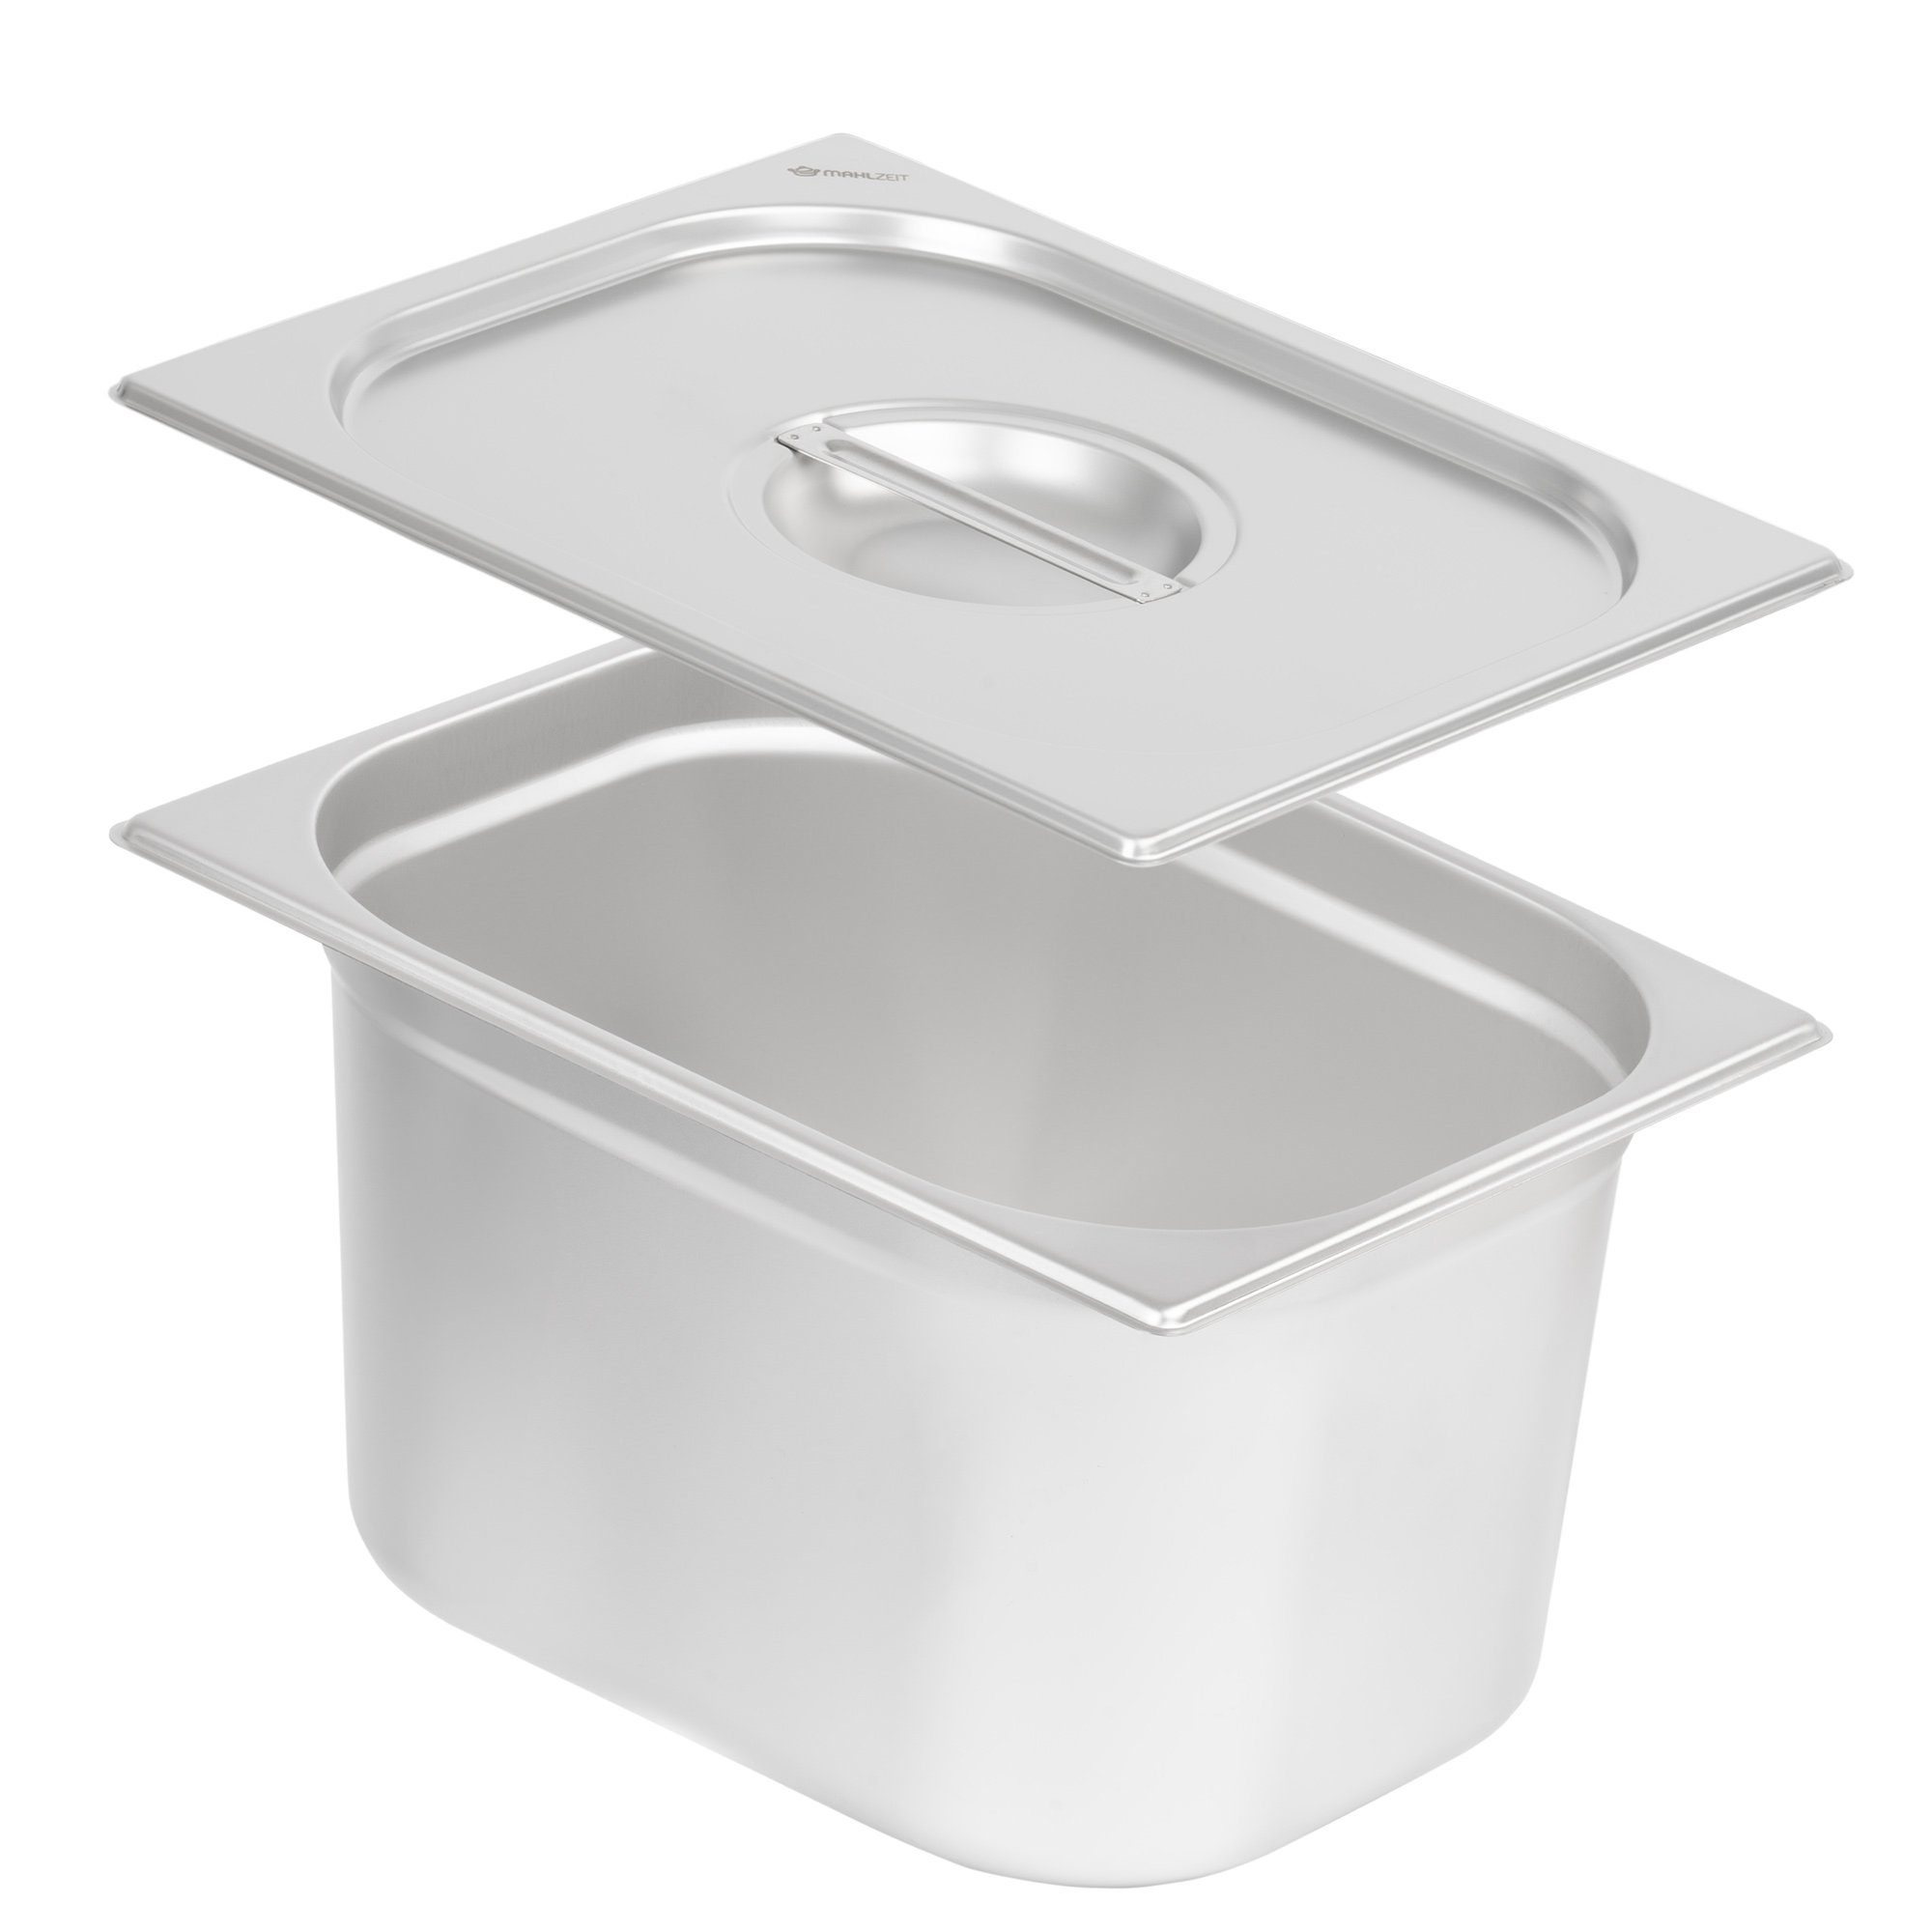 Mahlzeit Thermobehälter GN Behälter 1/2 mit Deckel, Höhe 200 mm, Edelstahl Wärmebehälter, Edelstahl, (Set, 2-tlg., 1x 1/2 GN Behälter mit Deckel(200 mm), für Chafing Dish